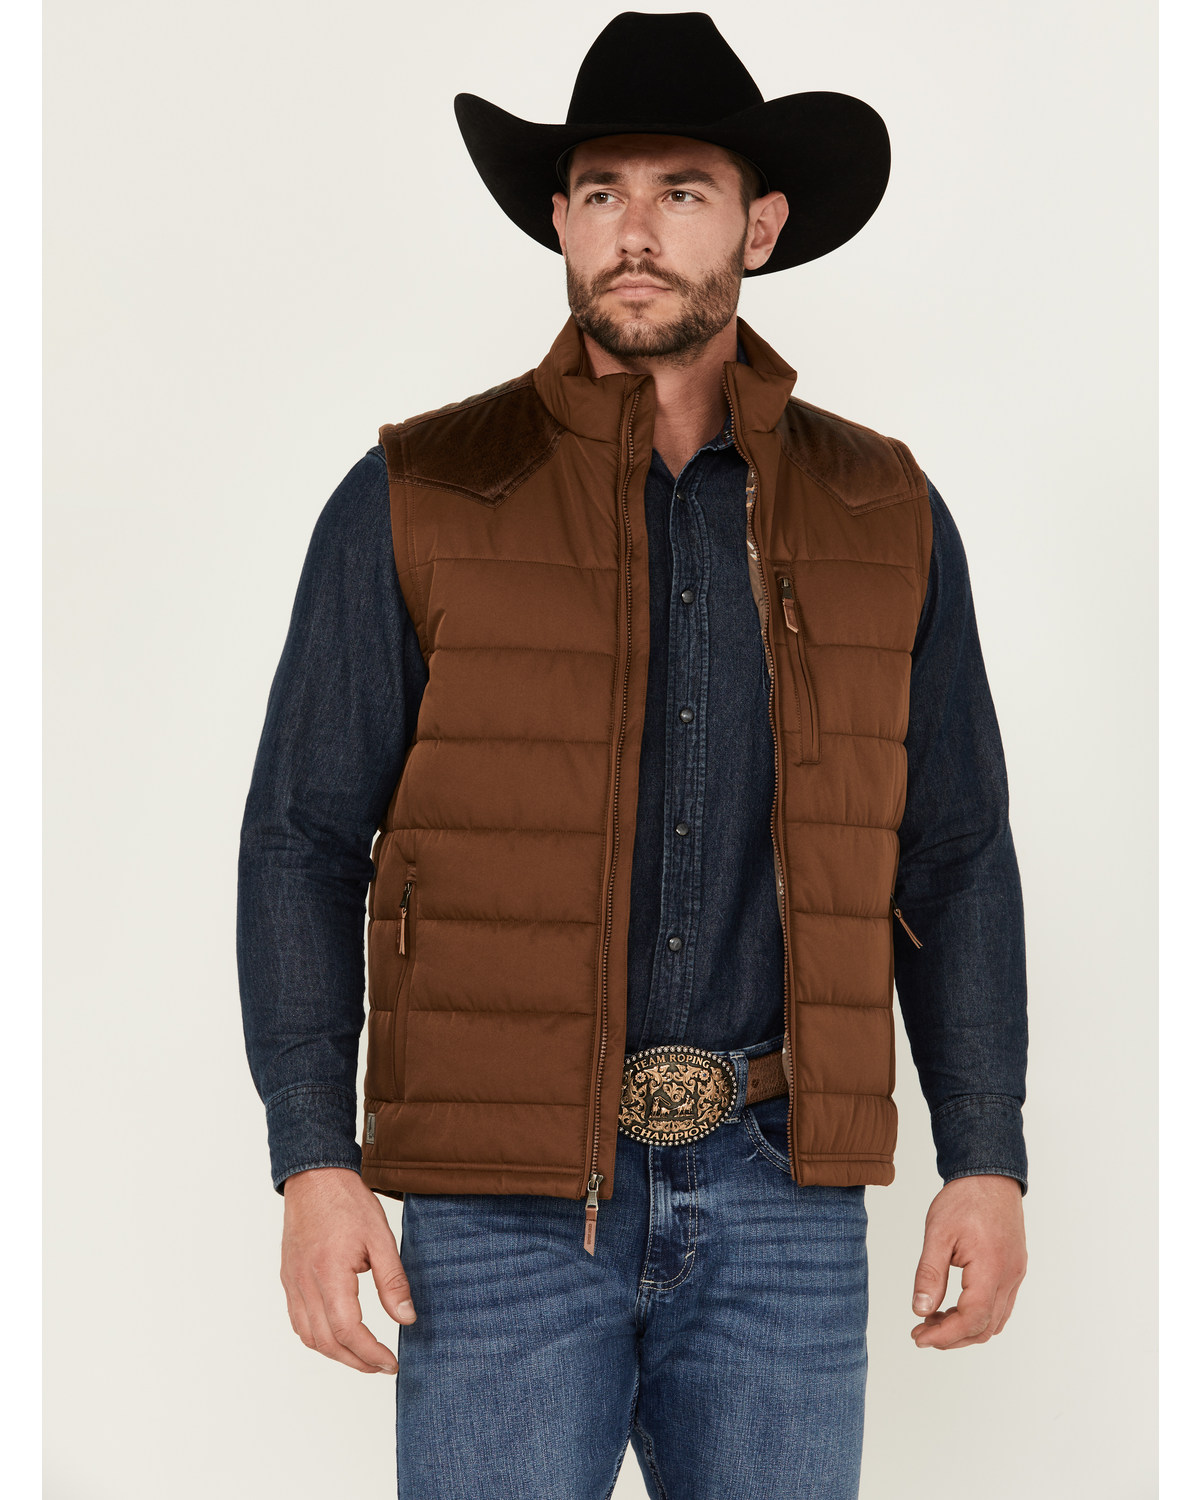 Cody James Men's Leather Yoke Puffer Vest